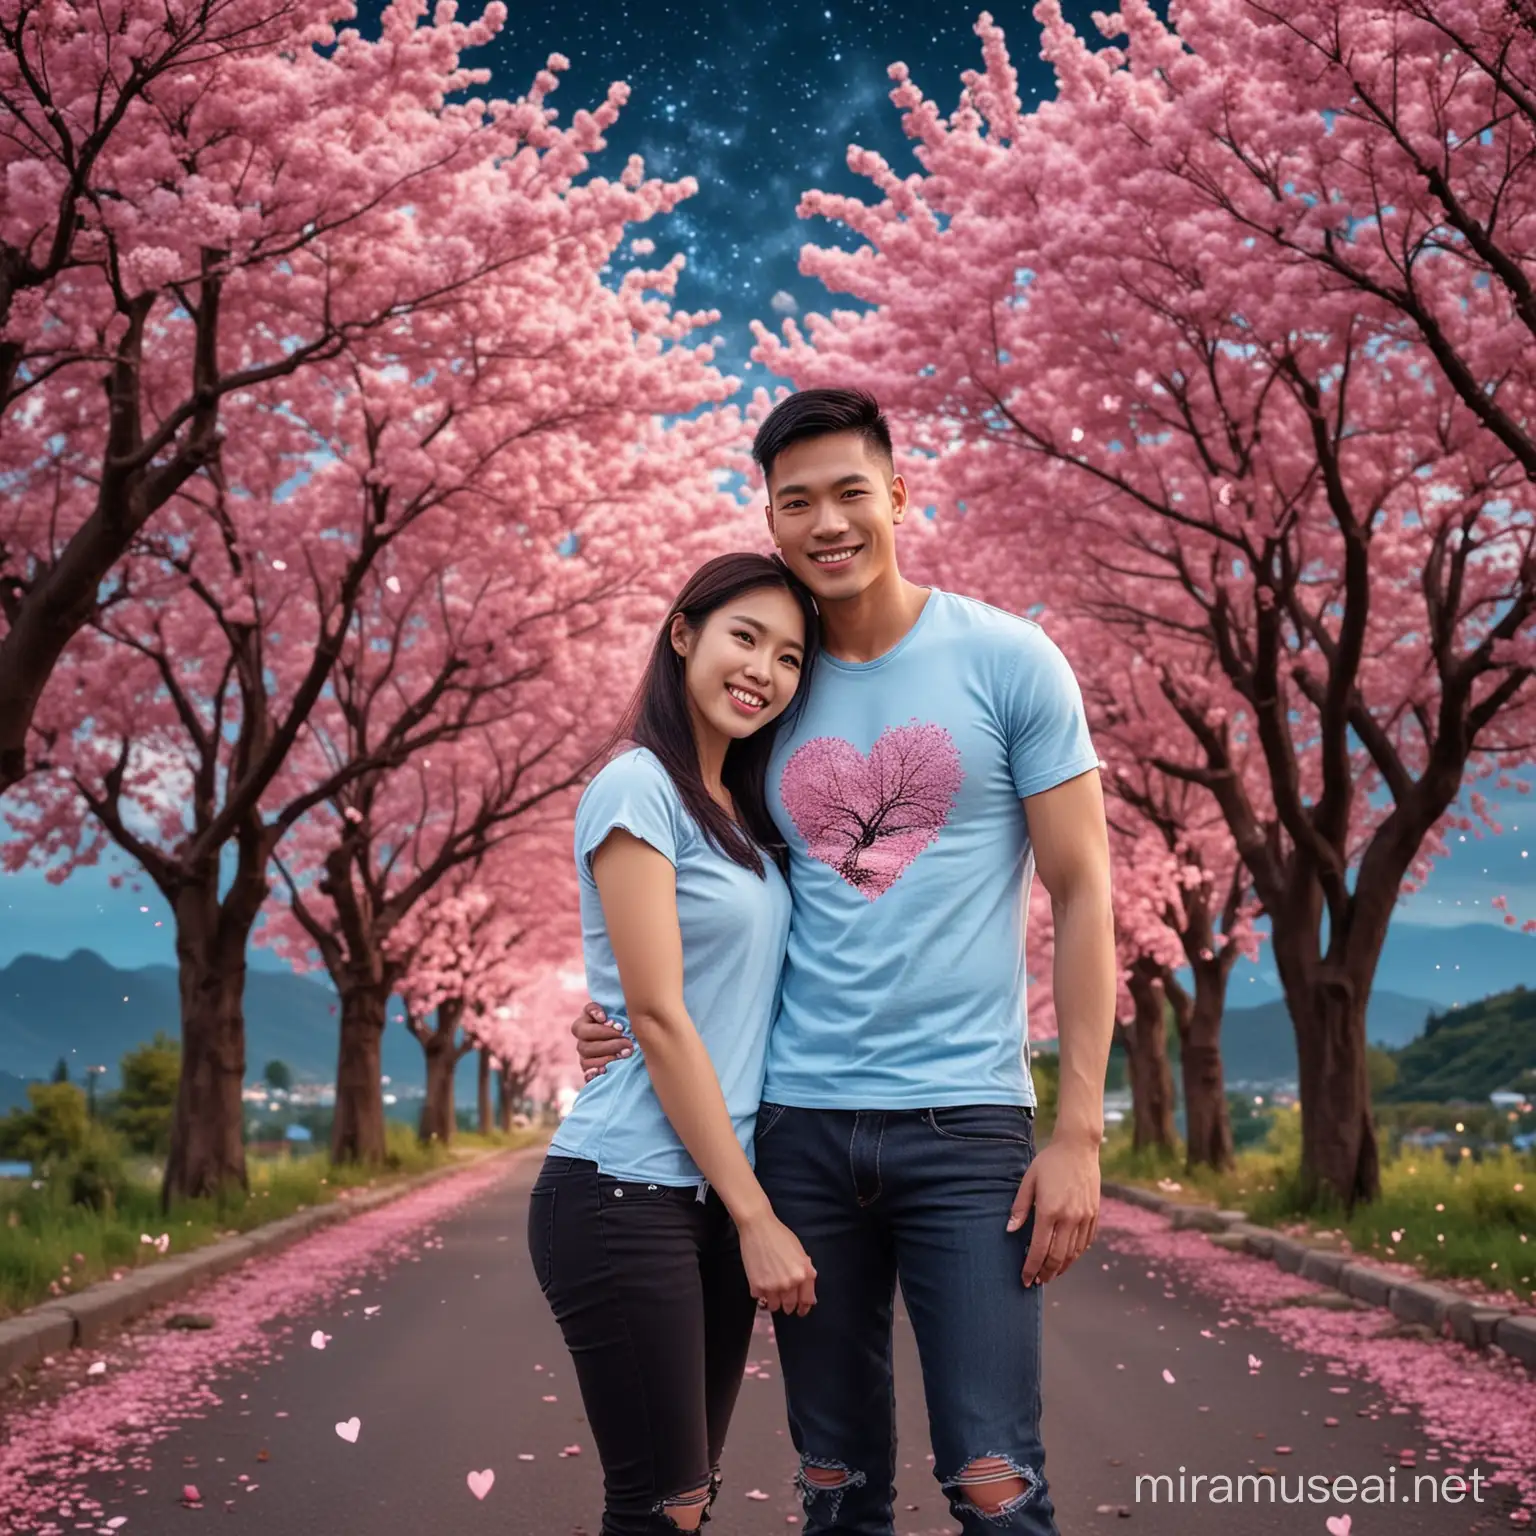 Romantic Asian Couple Embracing Under Cherry Blossom Night Sky